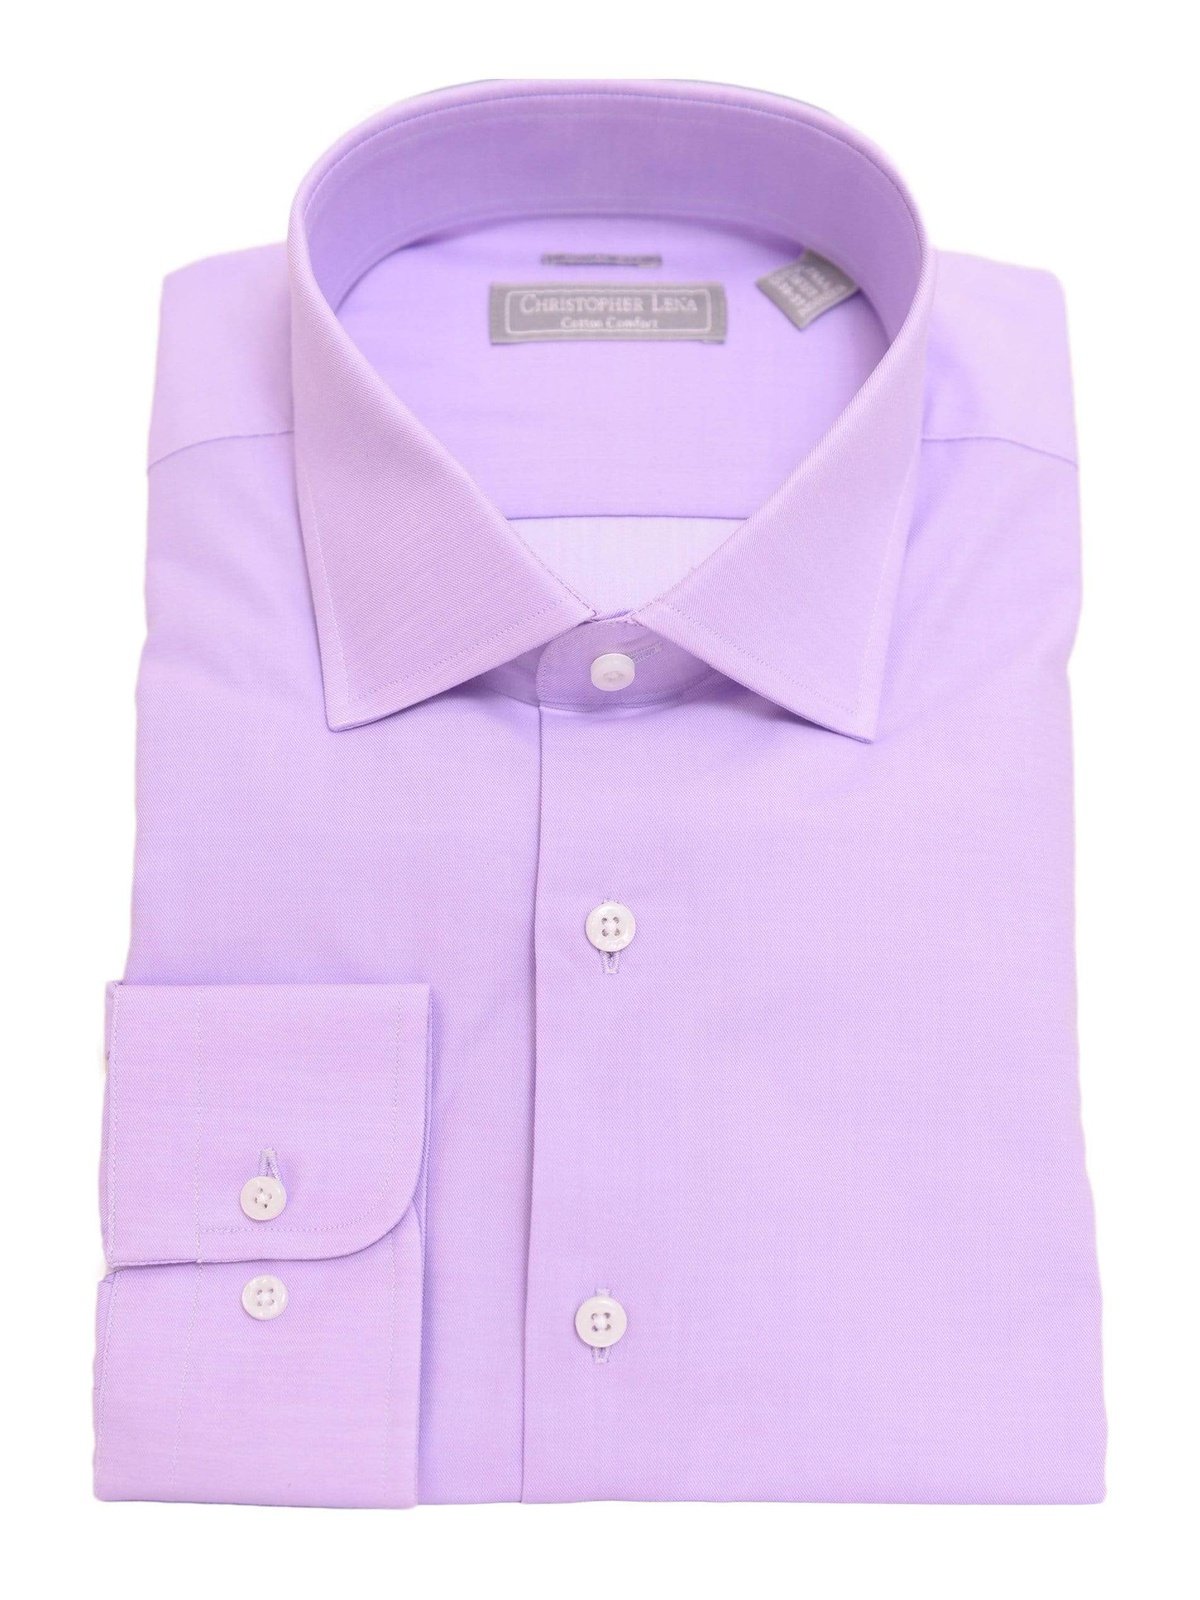 Christopher Lena SHIRTS 14 1/2 32/33 Mens Slim Fit Solid Lavender Purple Spread Collar Cotton Dress Shirt